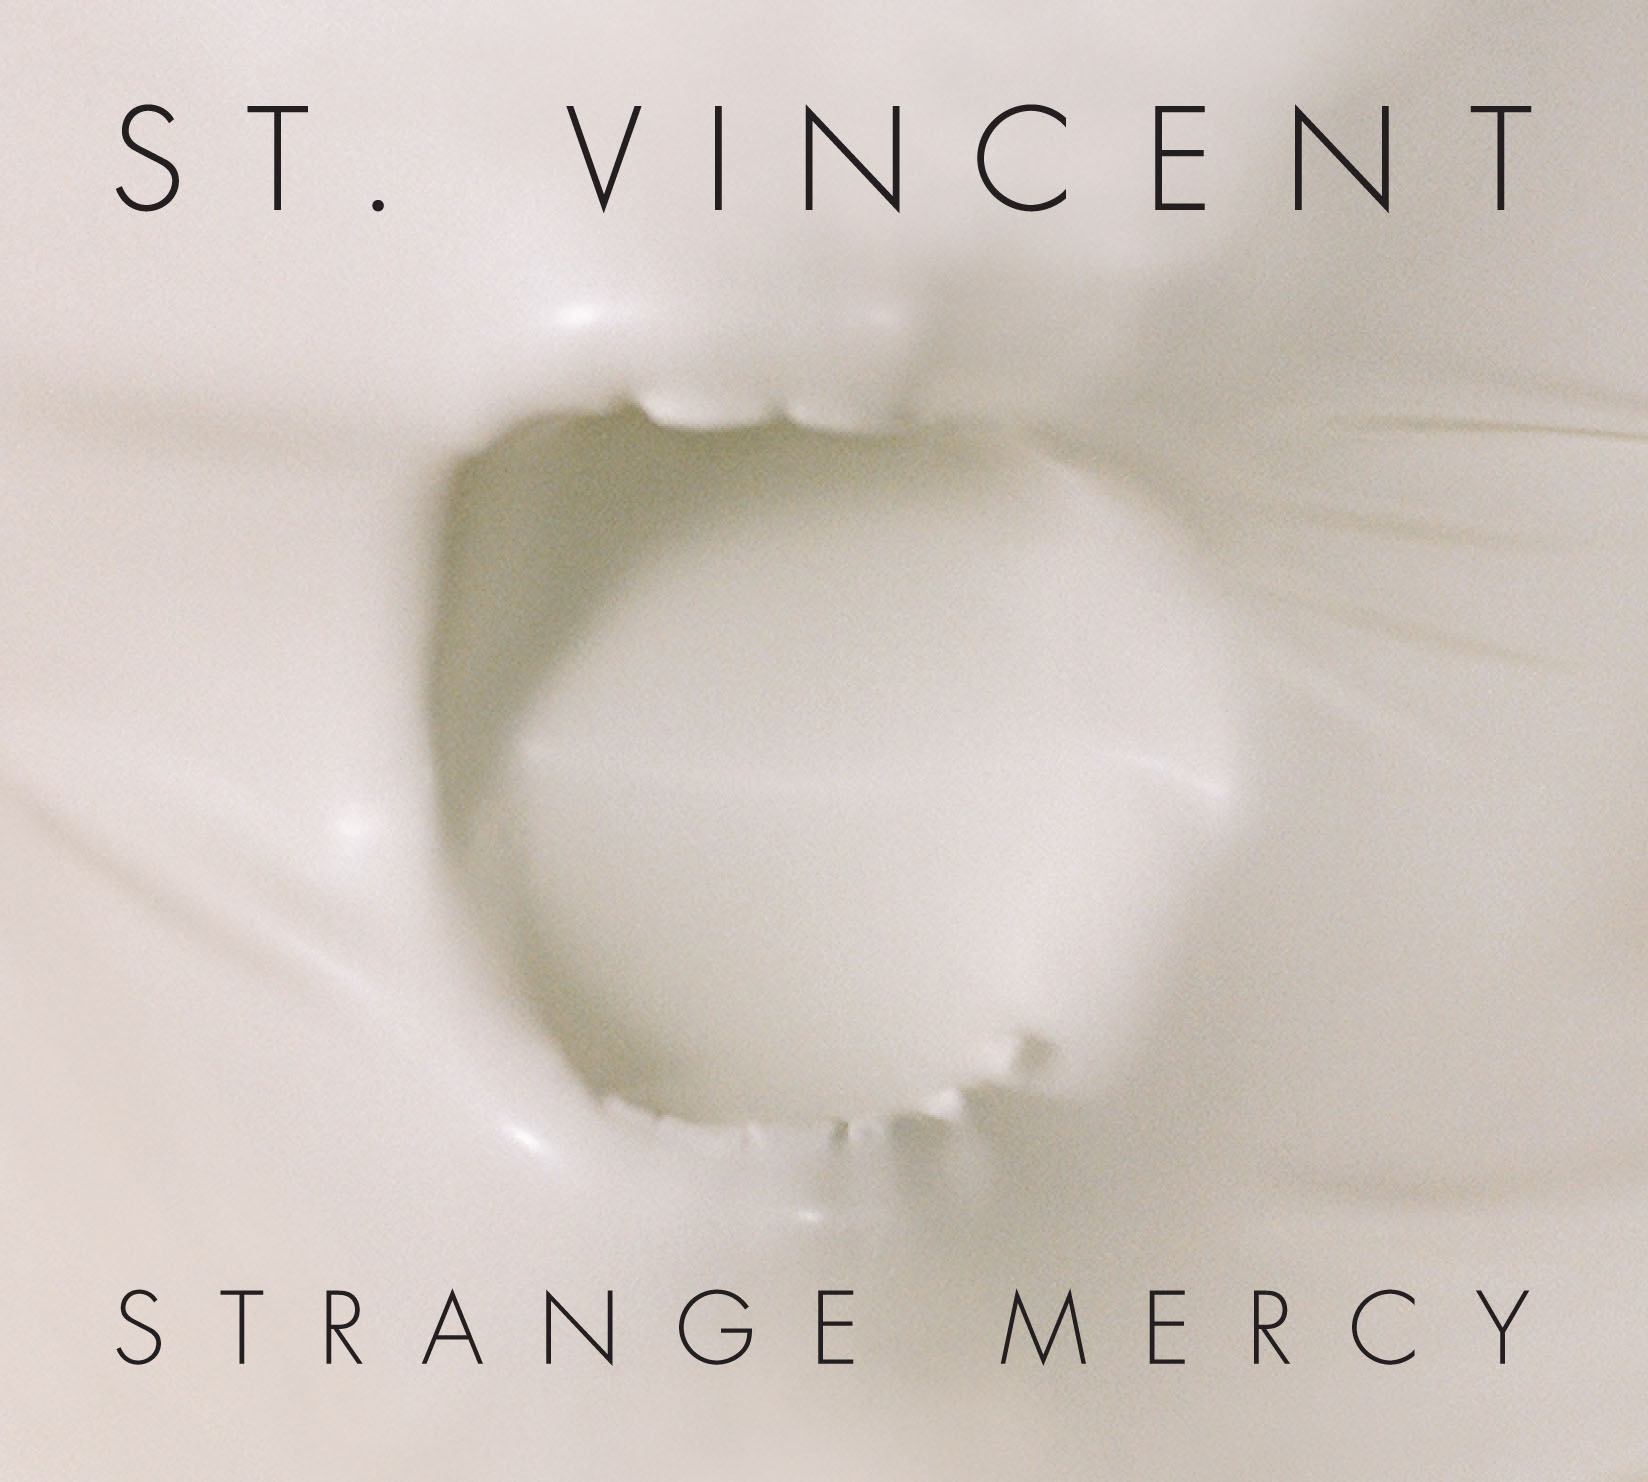 St. Vincent - Strange Mercy - CD